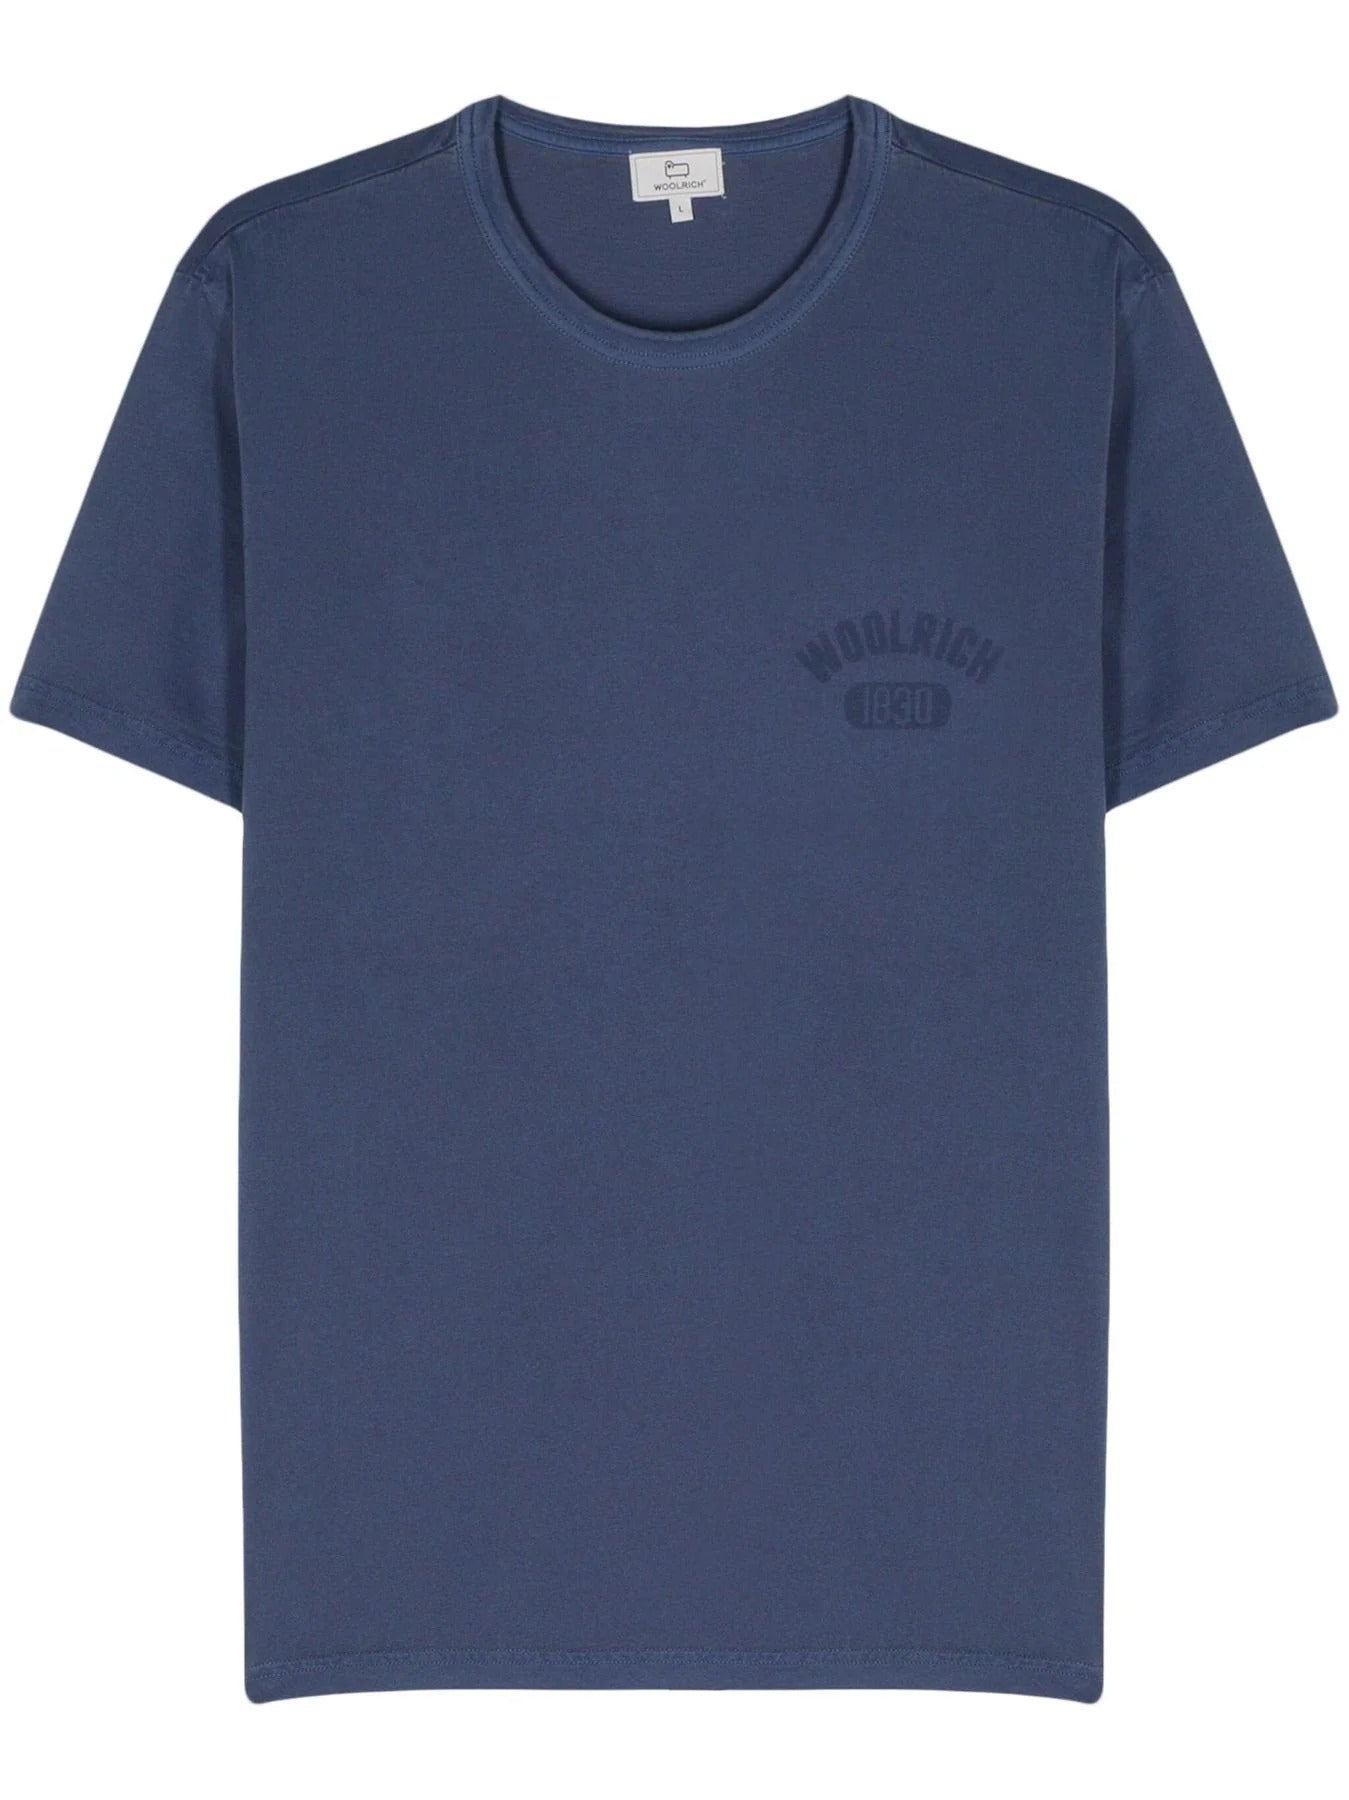 Woolrich T-Shirt Uomo Garment Dyed Logo-Maritime Blue